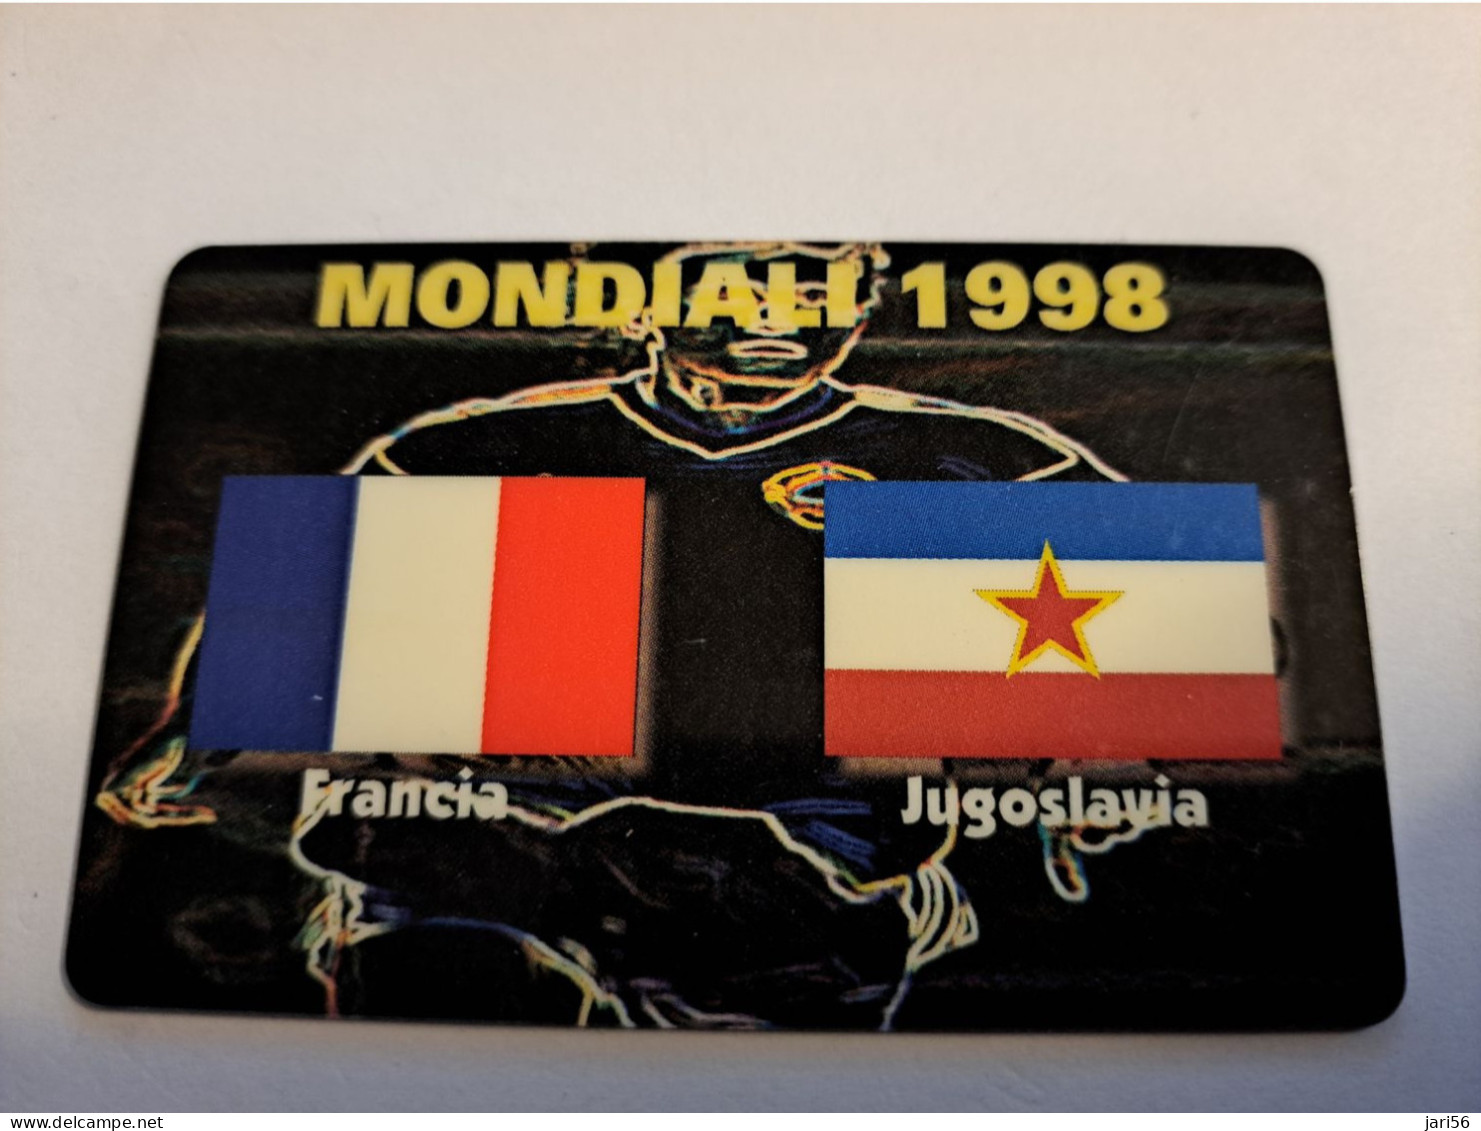 ITALIA/ITALY  PREPAID/ MONDIALI 1998 / FLAGS/ FRANCE / JUGOSLAVIA  MINT      **16069** - Collections